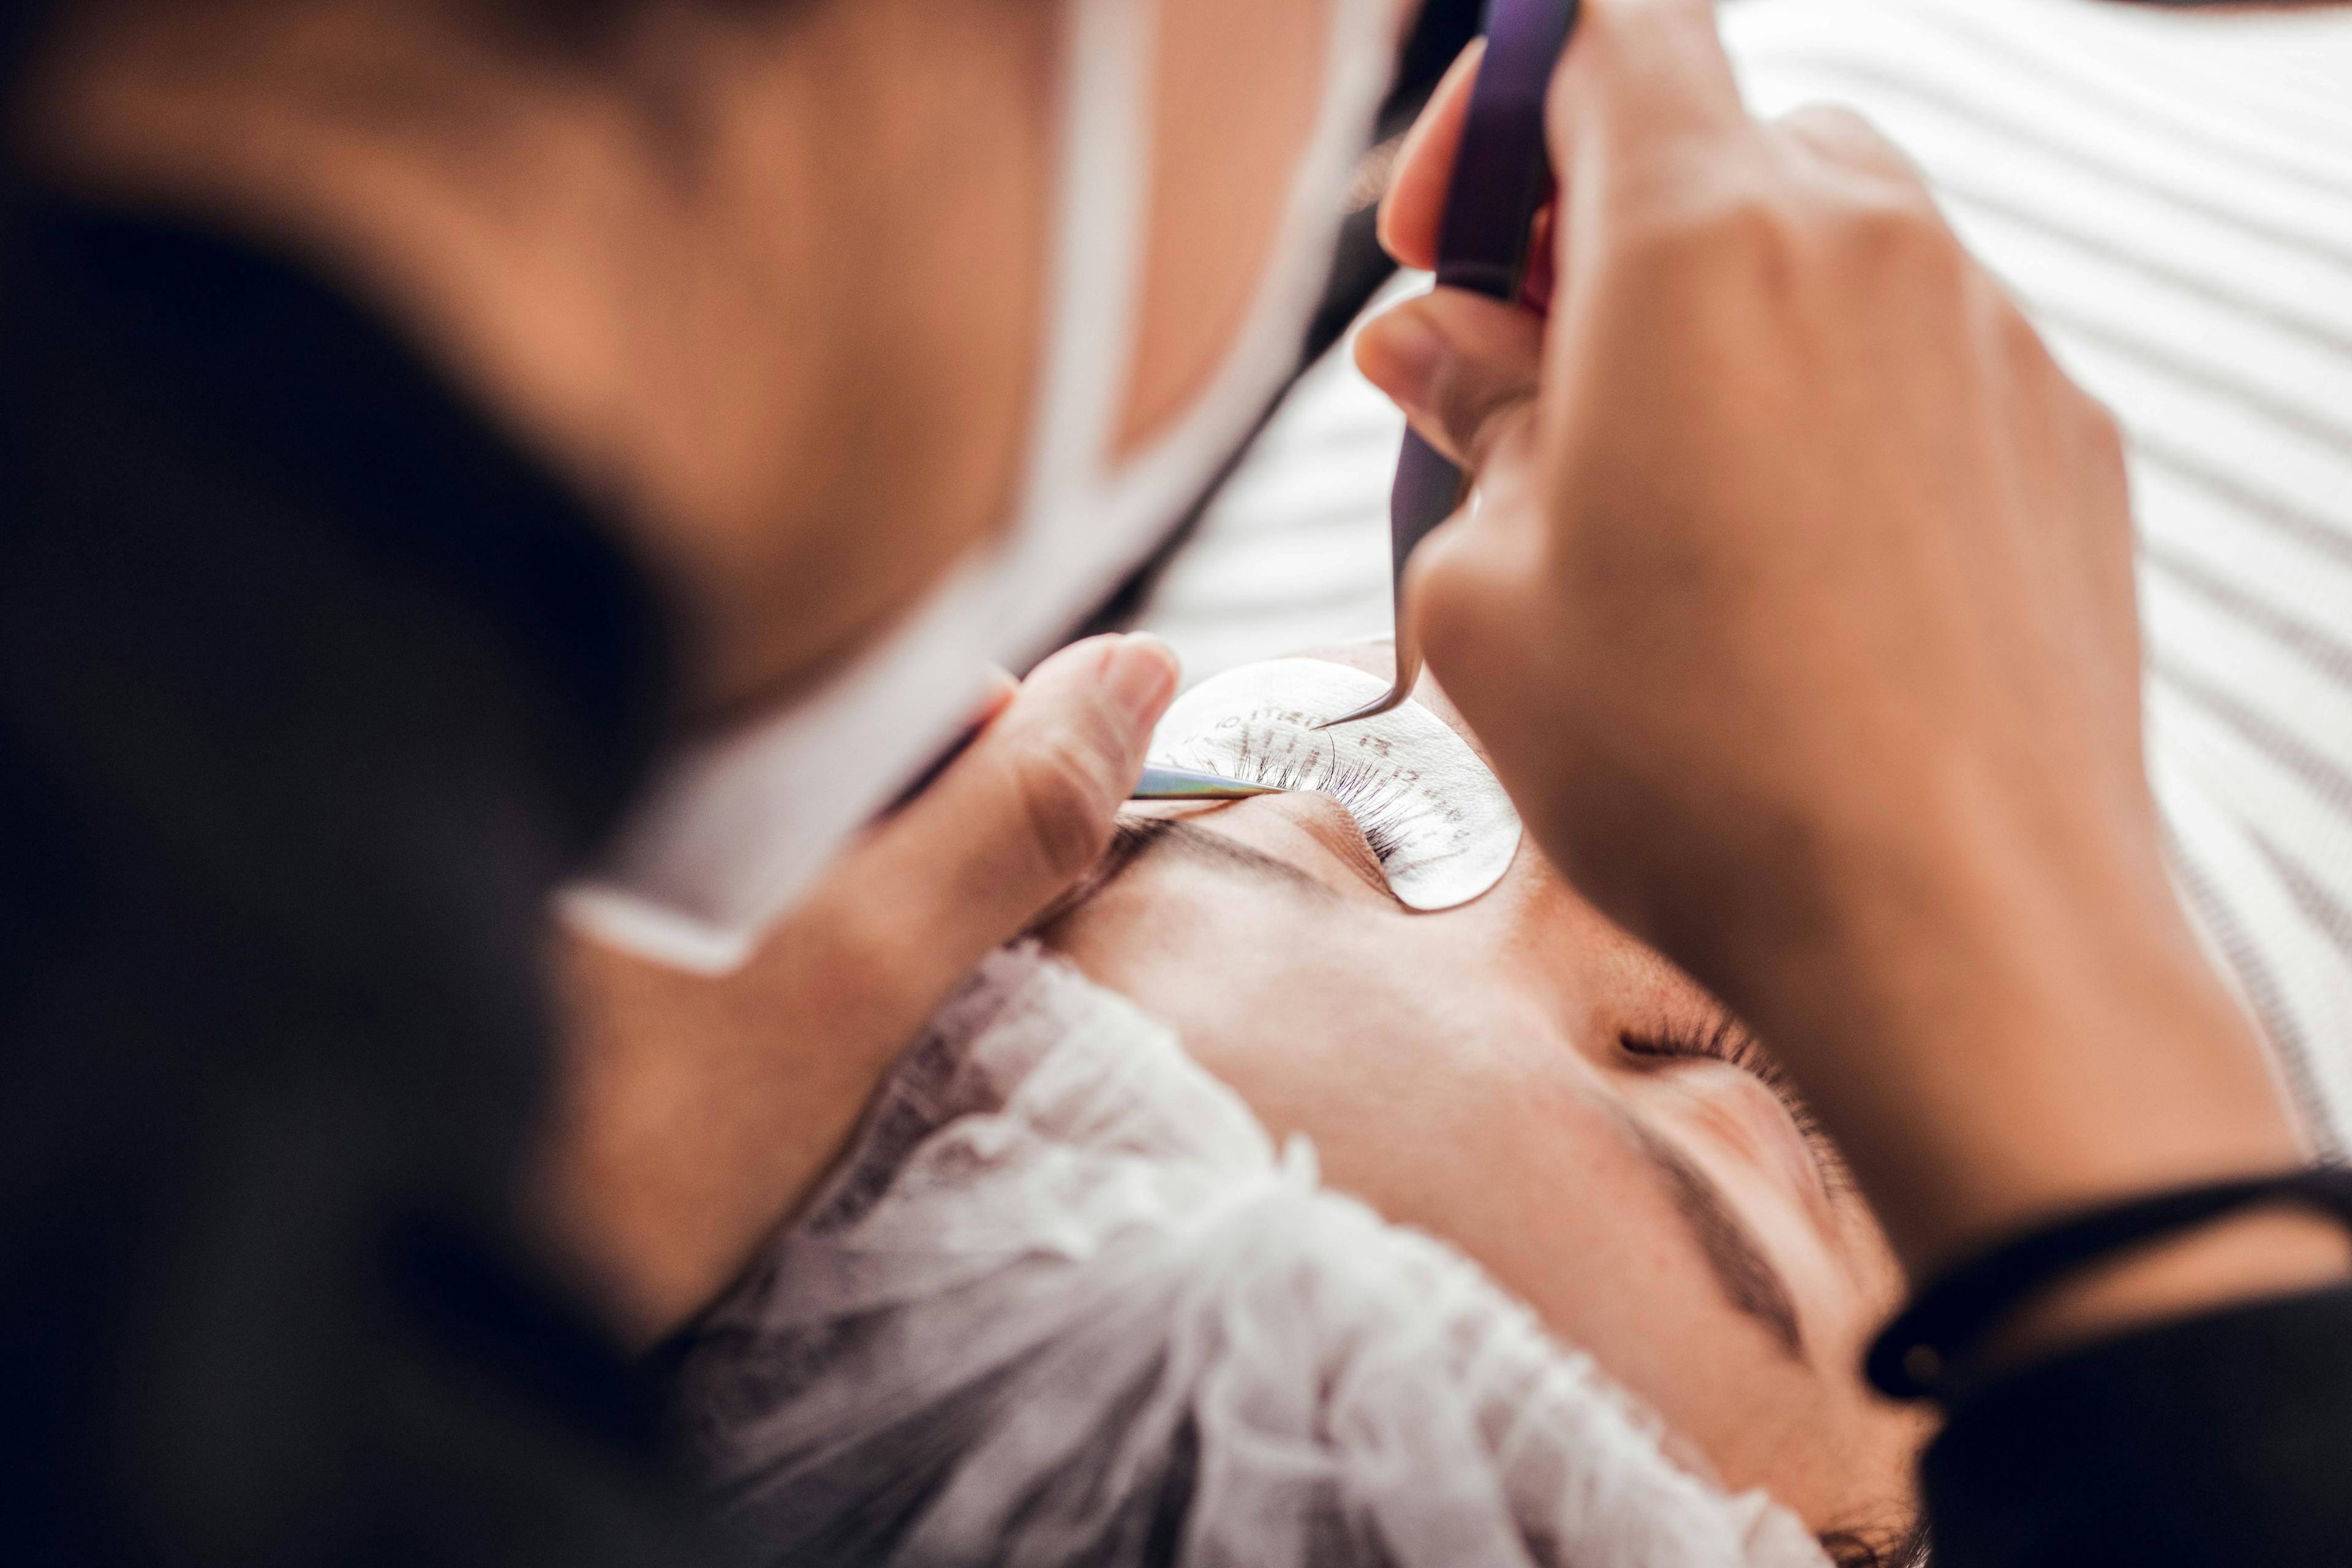 Applying false lashes to a patient | Image credit: © Leon Colon Ortega/Wirestock - stock.adobe.com